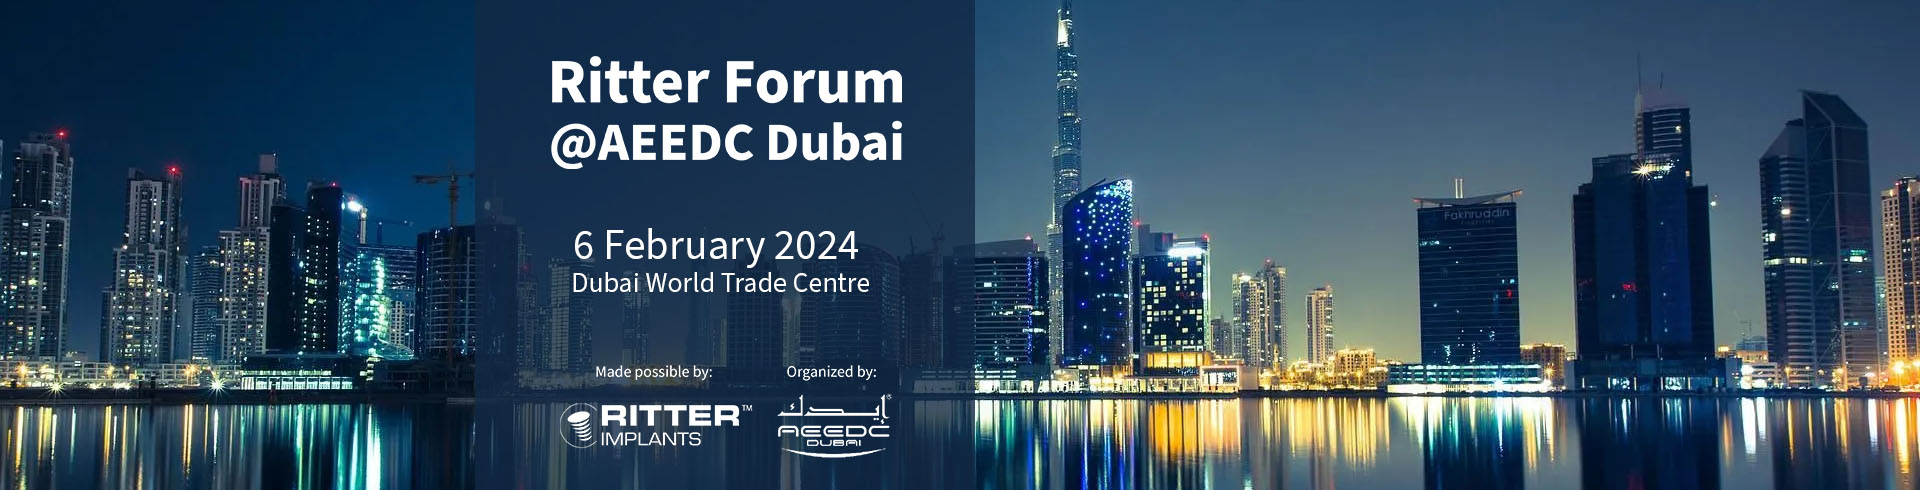 Ritter Forum Dubai 2024